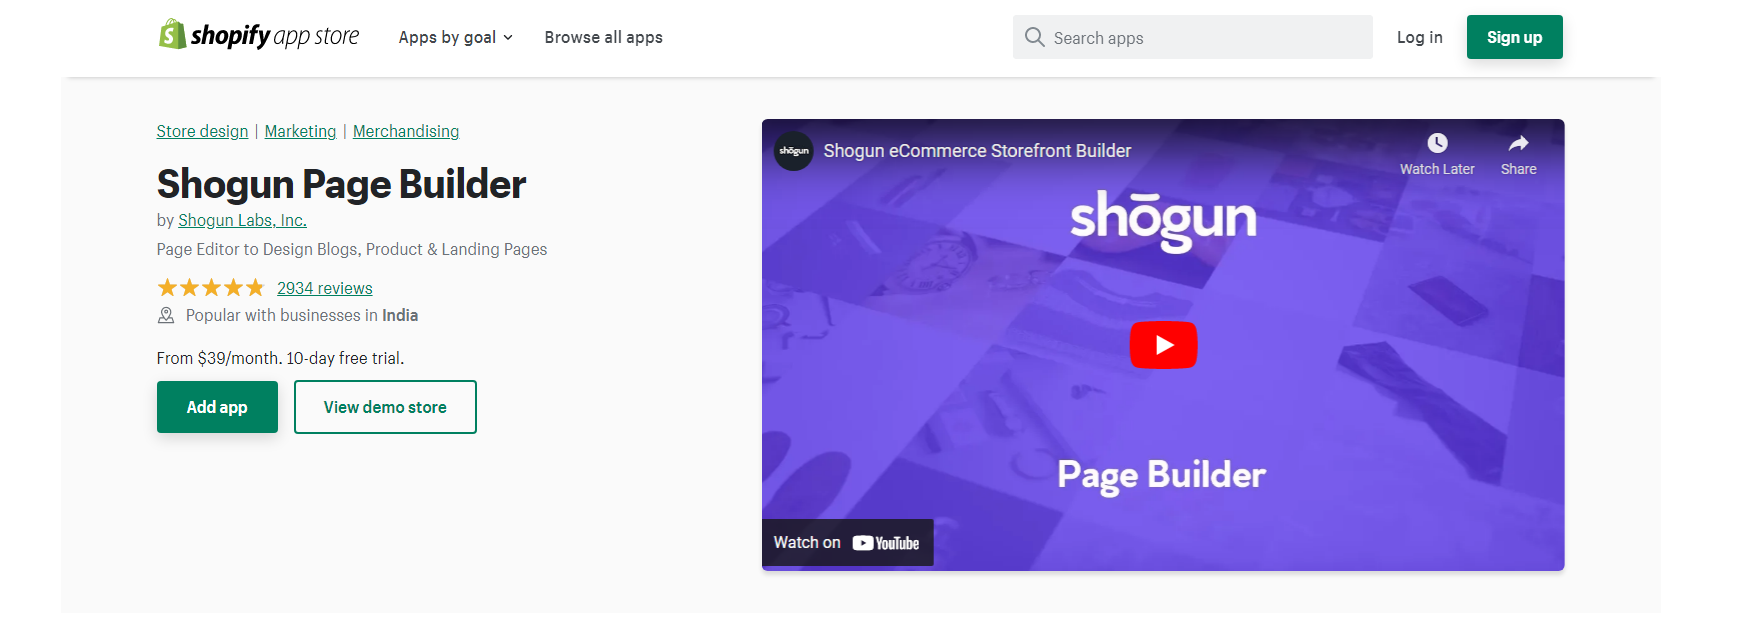 Shogun Page Builder - Shopify page builder